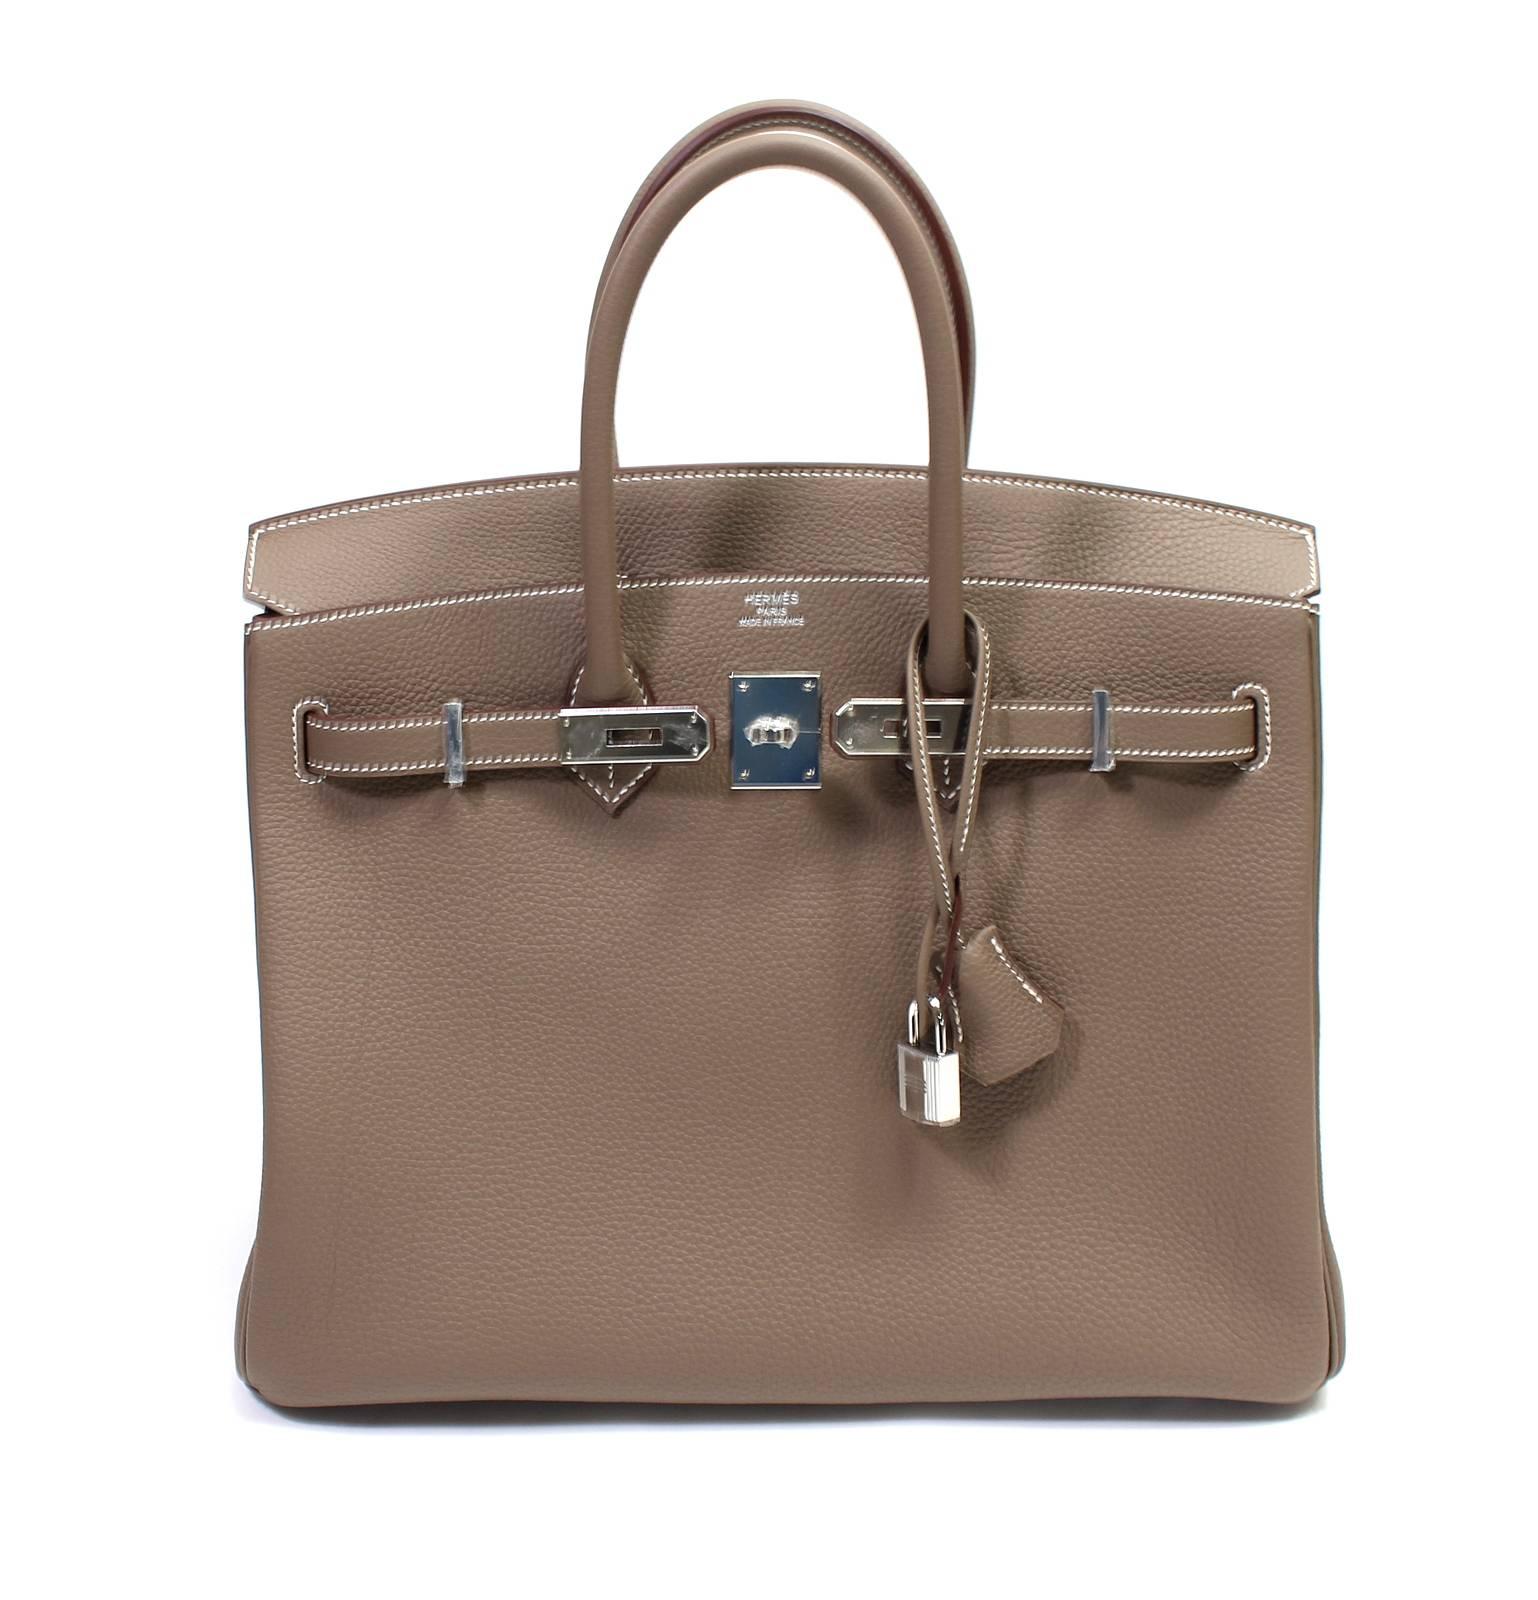 Hermès Etoupe Togo 35 cm Birkin Bag with Palladium Hardware 5